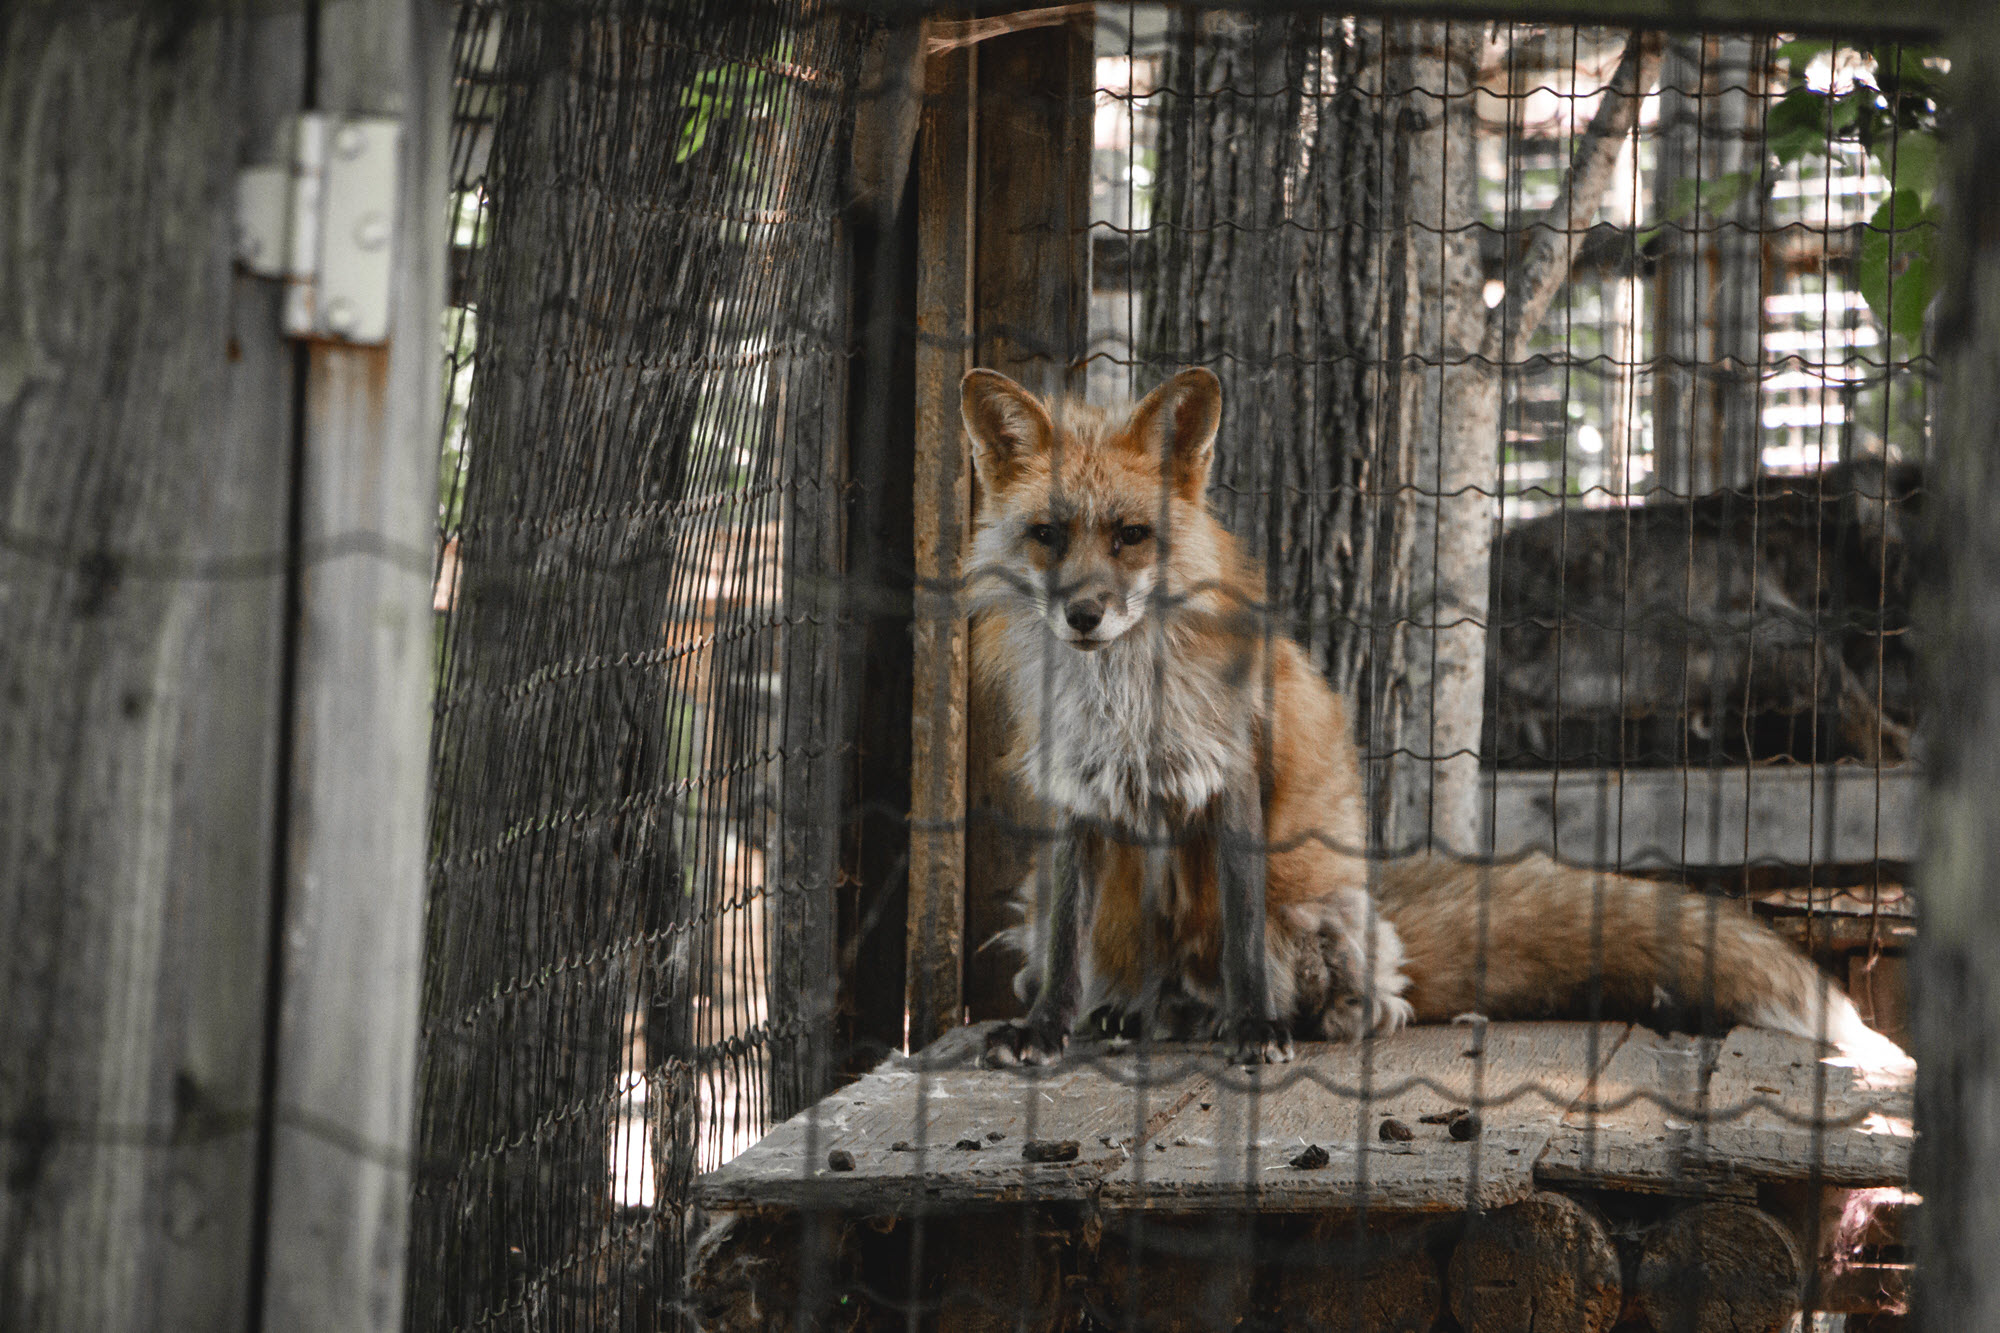 Image shows fox in barren enclosure at Killman Zoo.